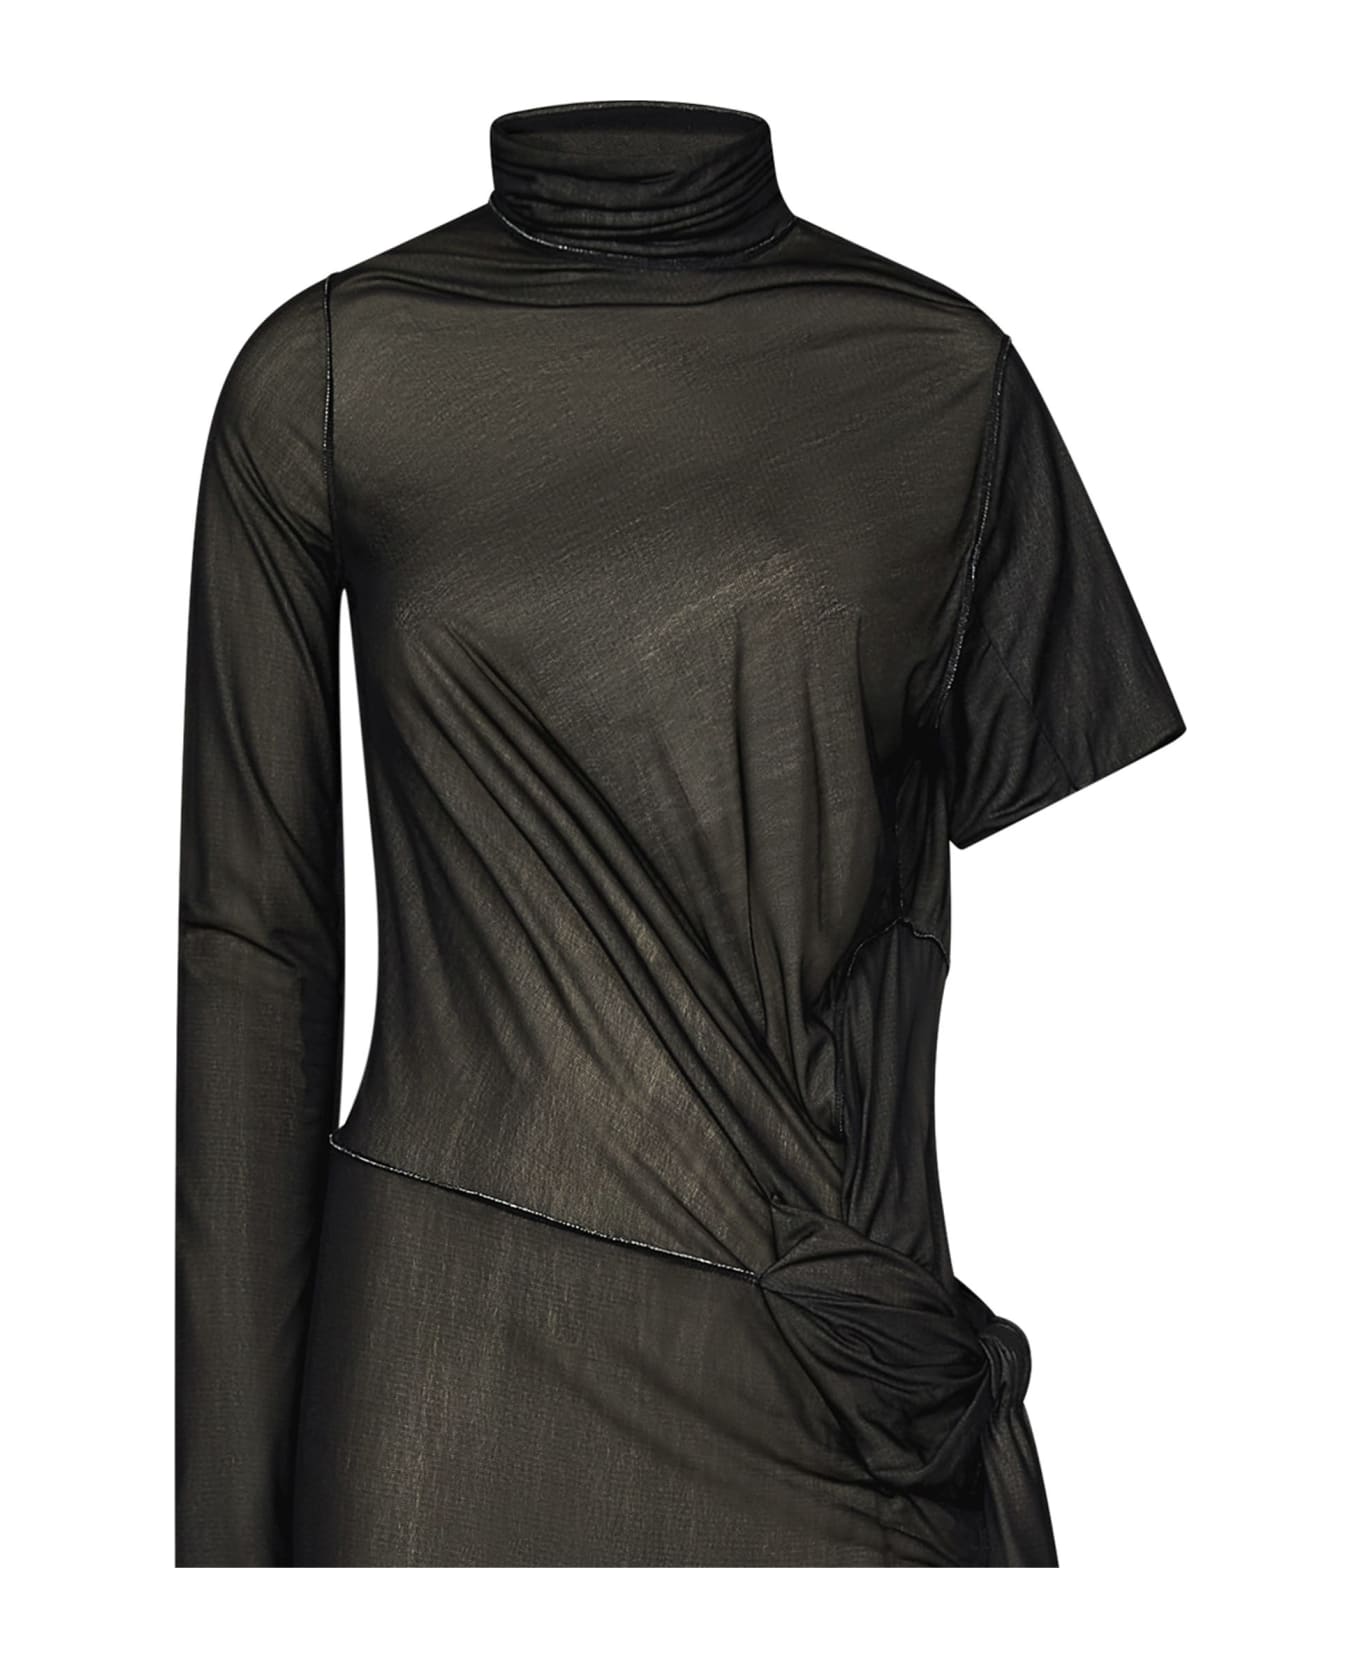 Maison Margiela One-shoulder Semi-sheer Midi Dress - Black Butter ワンピース＆ドレス